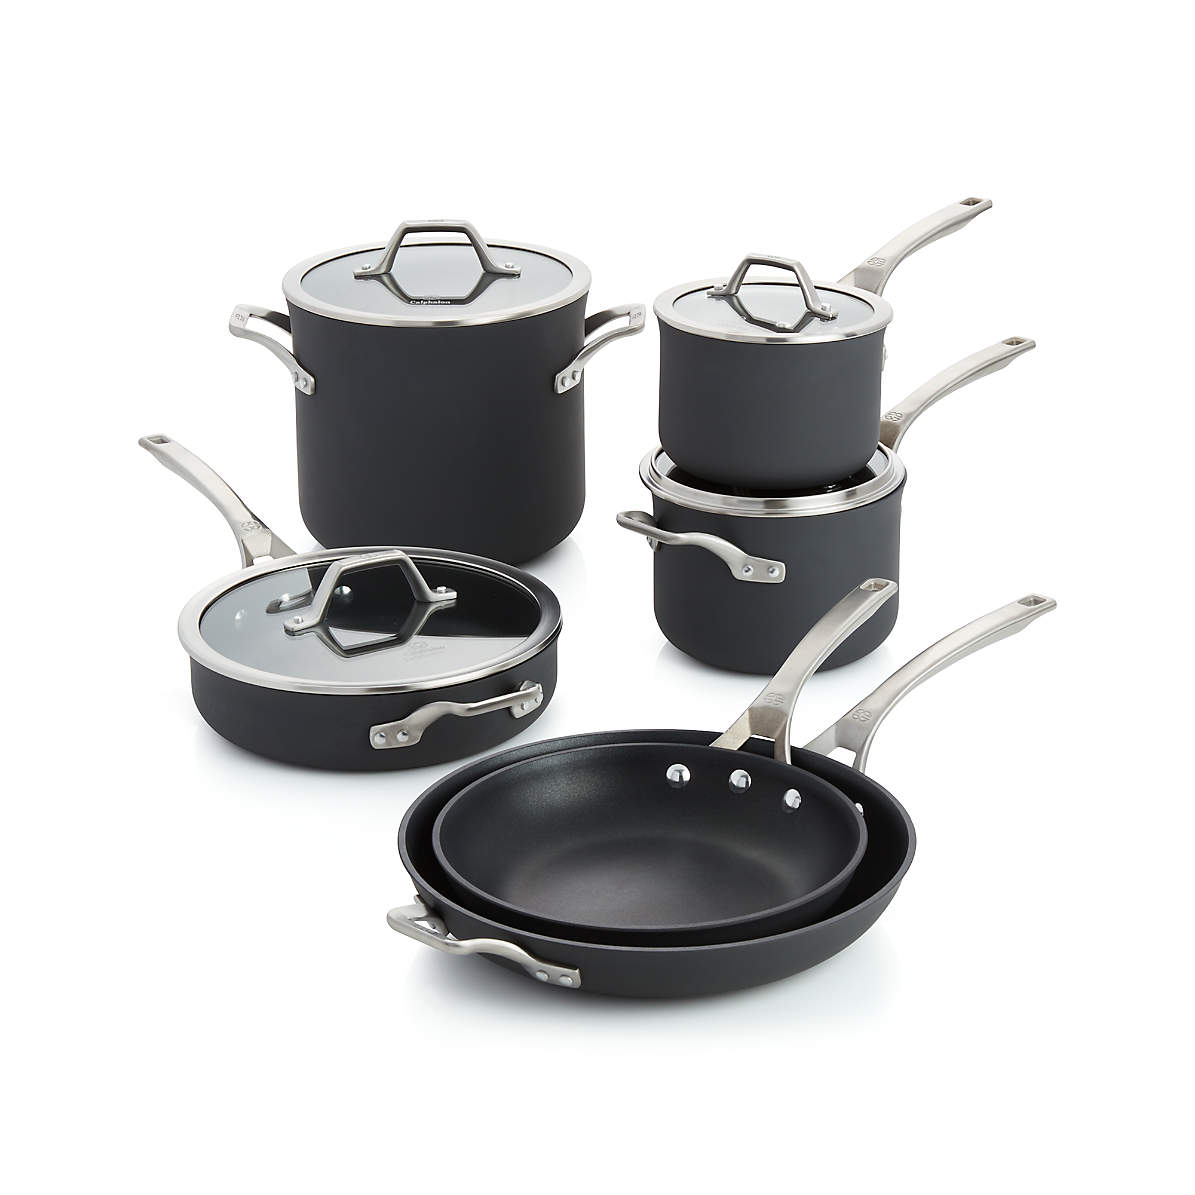 Williams-Sonoma Elite Hard-Anodized Nonstick 15-Piece Cookware Set